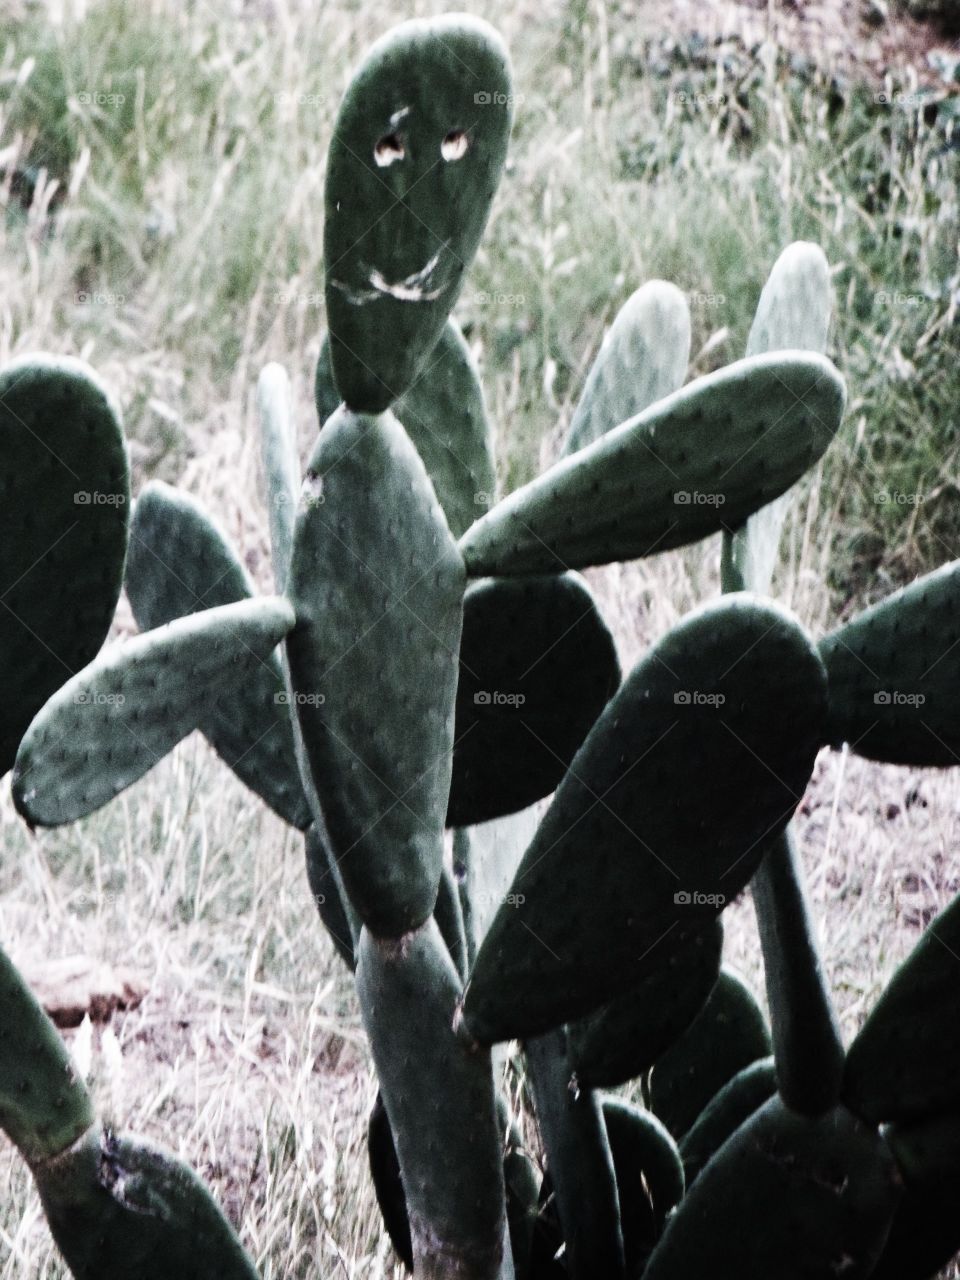 Cactus man in Spain